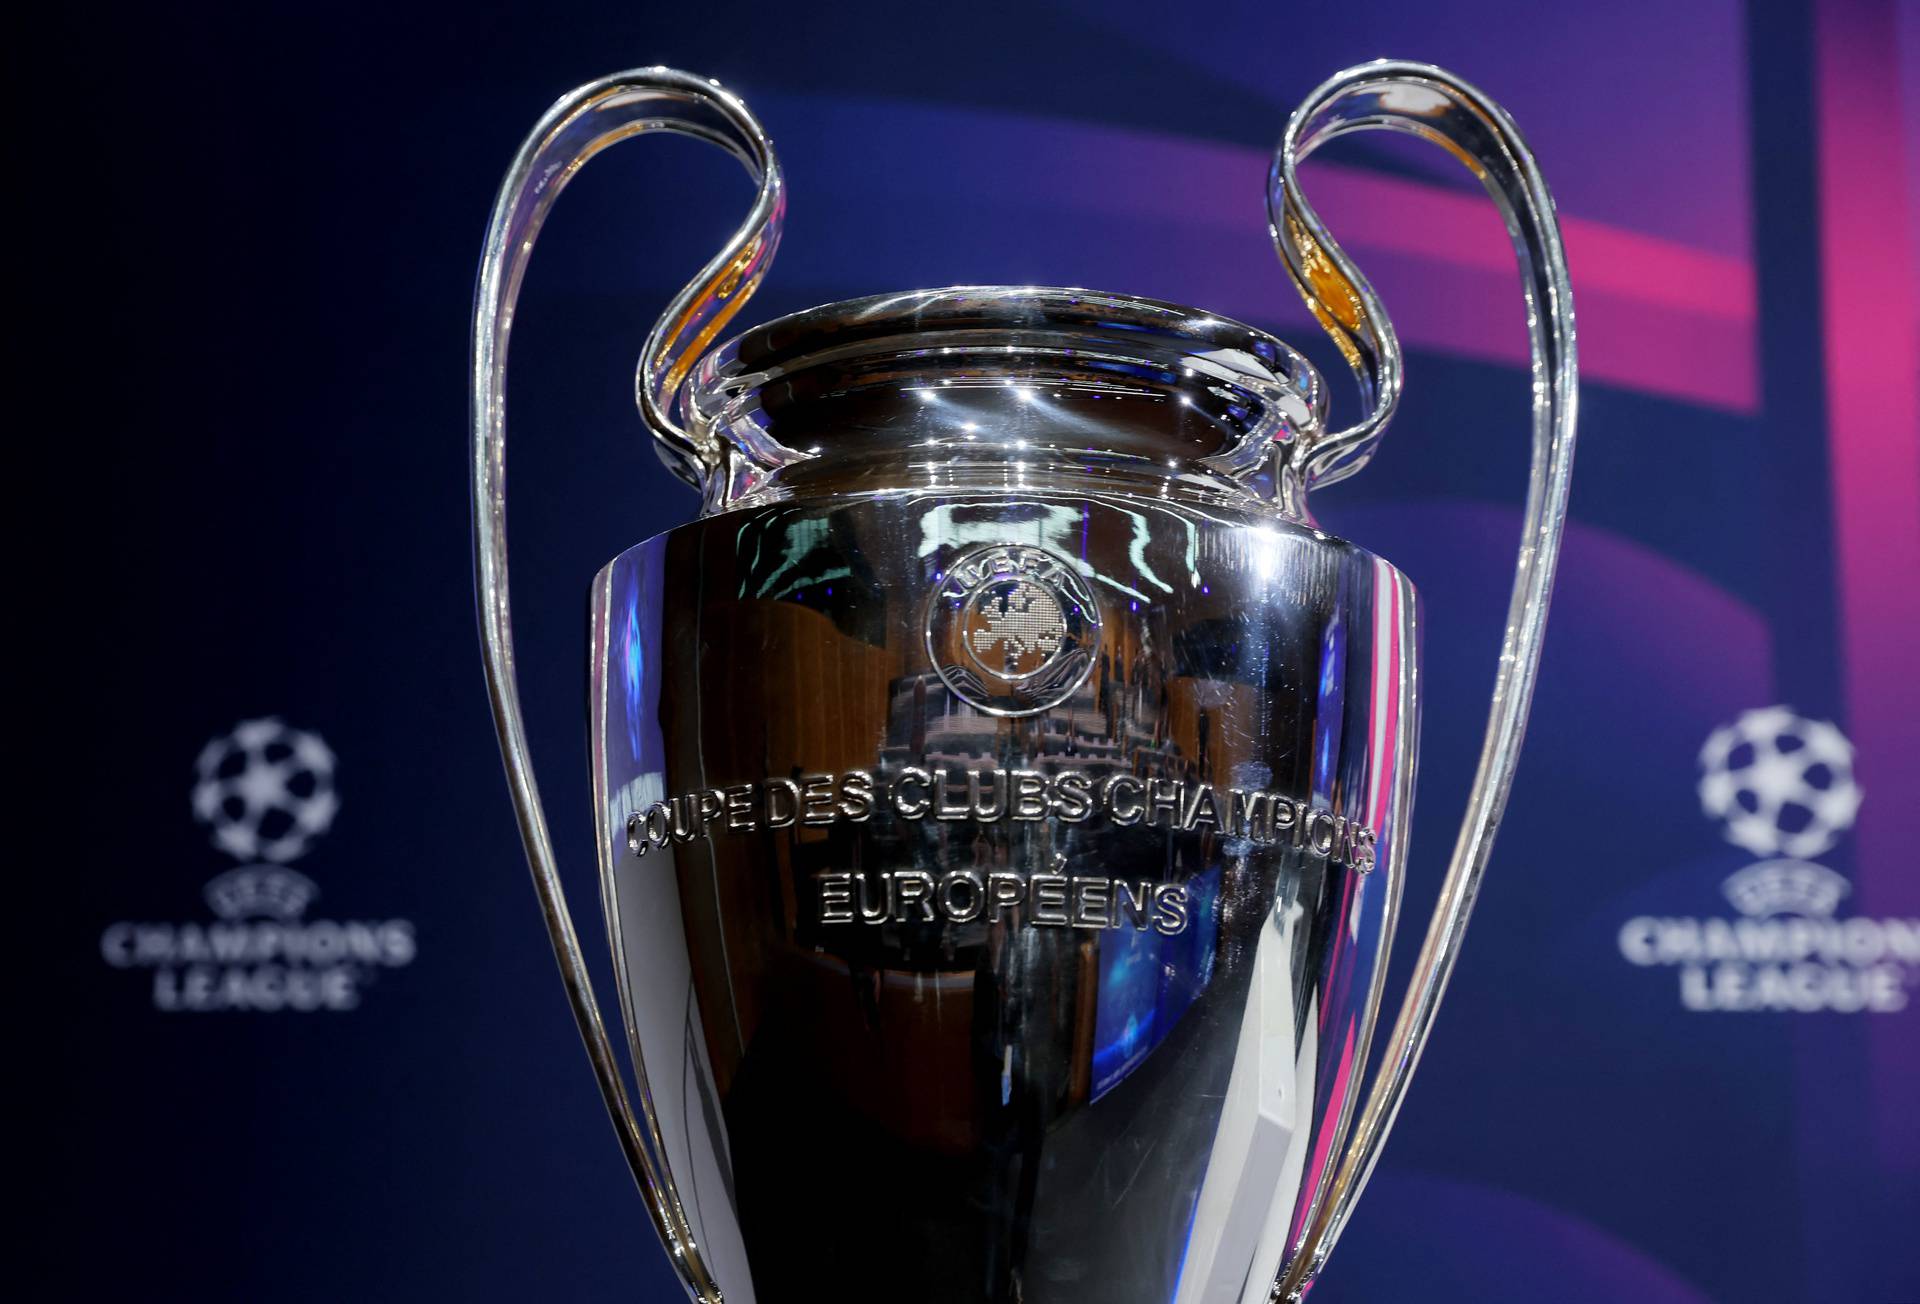 Champions League - Quarter-Final and Semi-Final draw